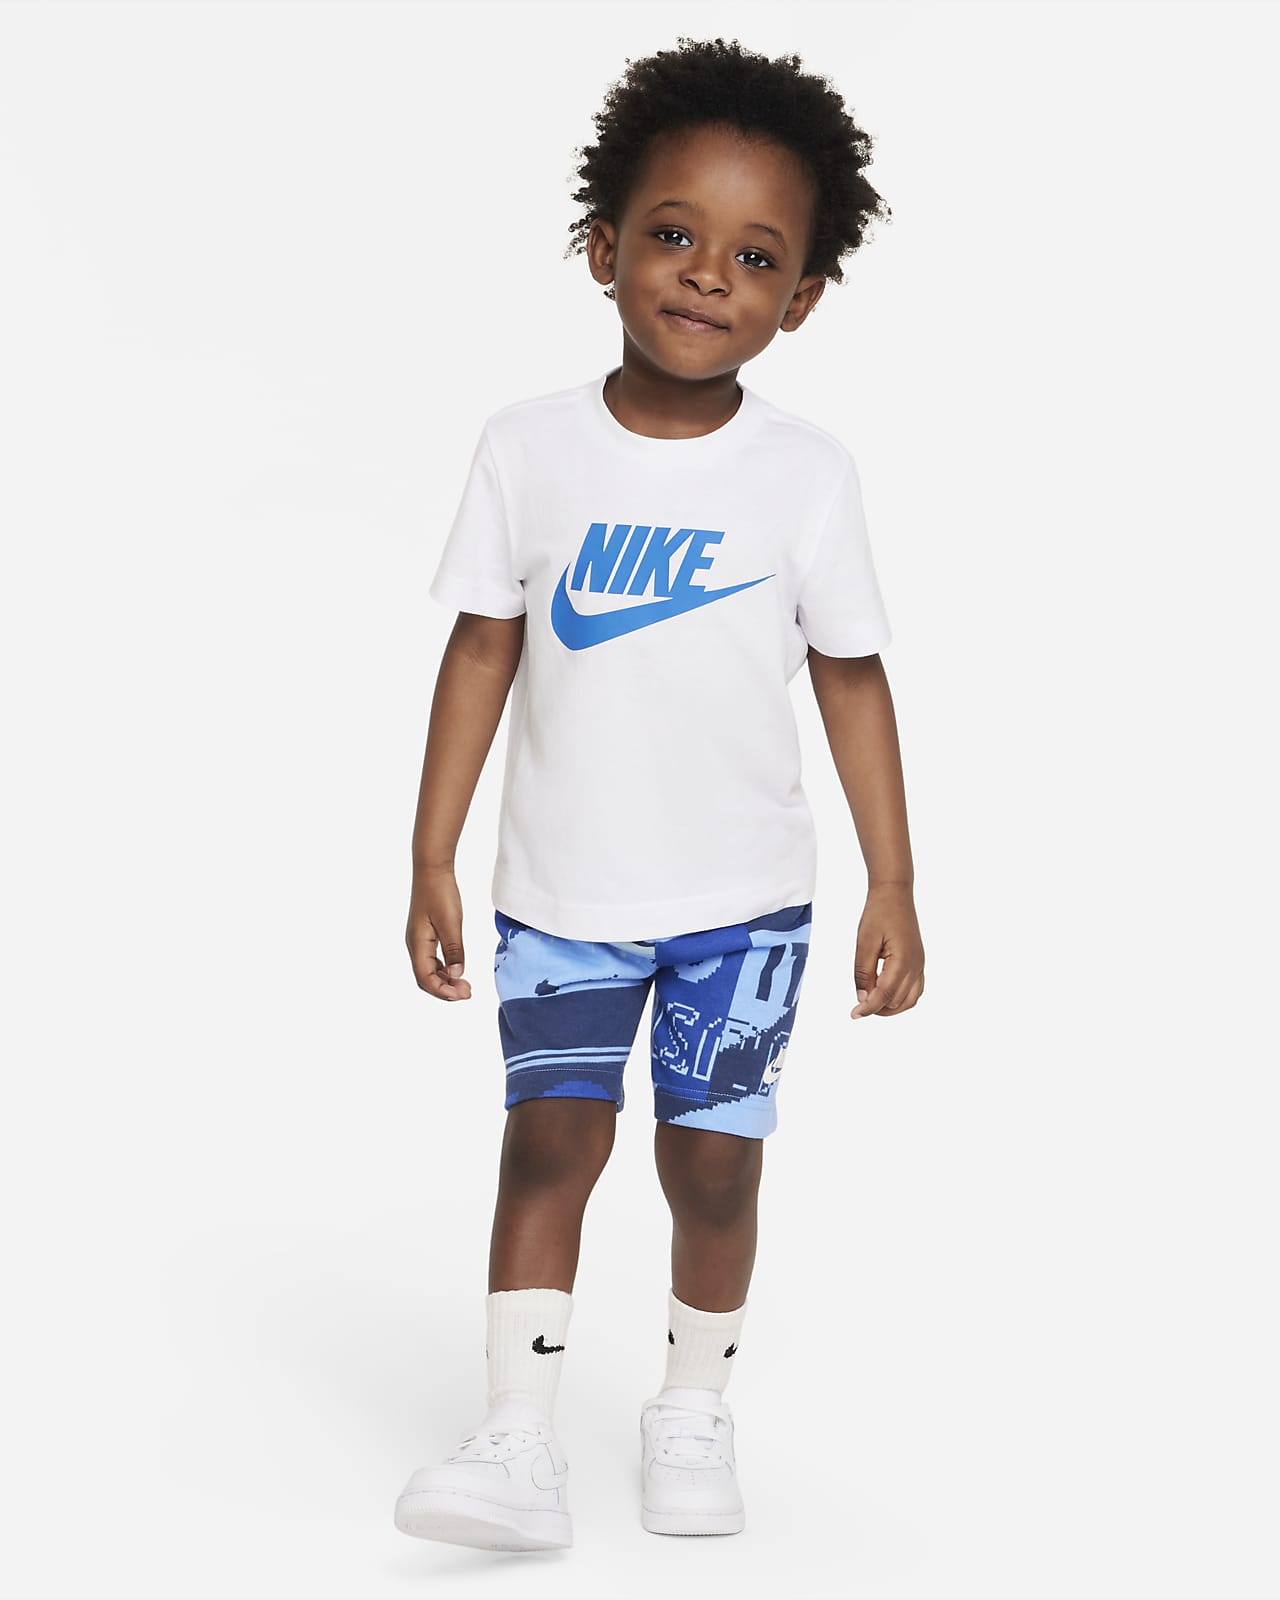 Boys Nike Sets.